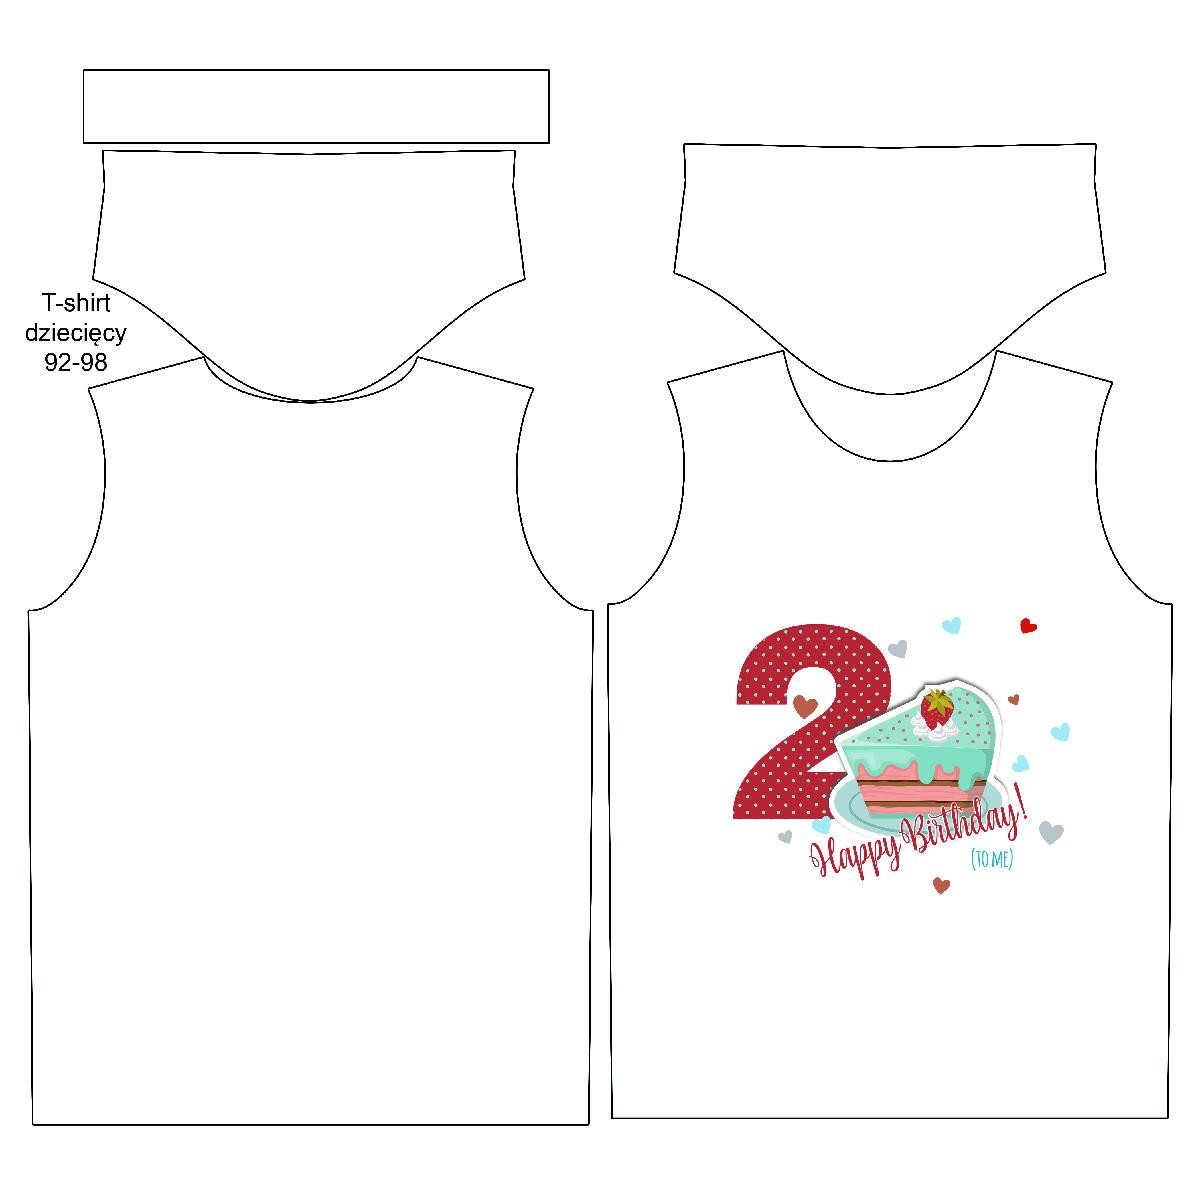 KID’S T-SHIRT - 2ST BIRTHDAY / BIRTHDAY CAKE - single jersey 